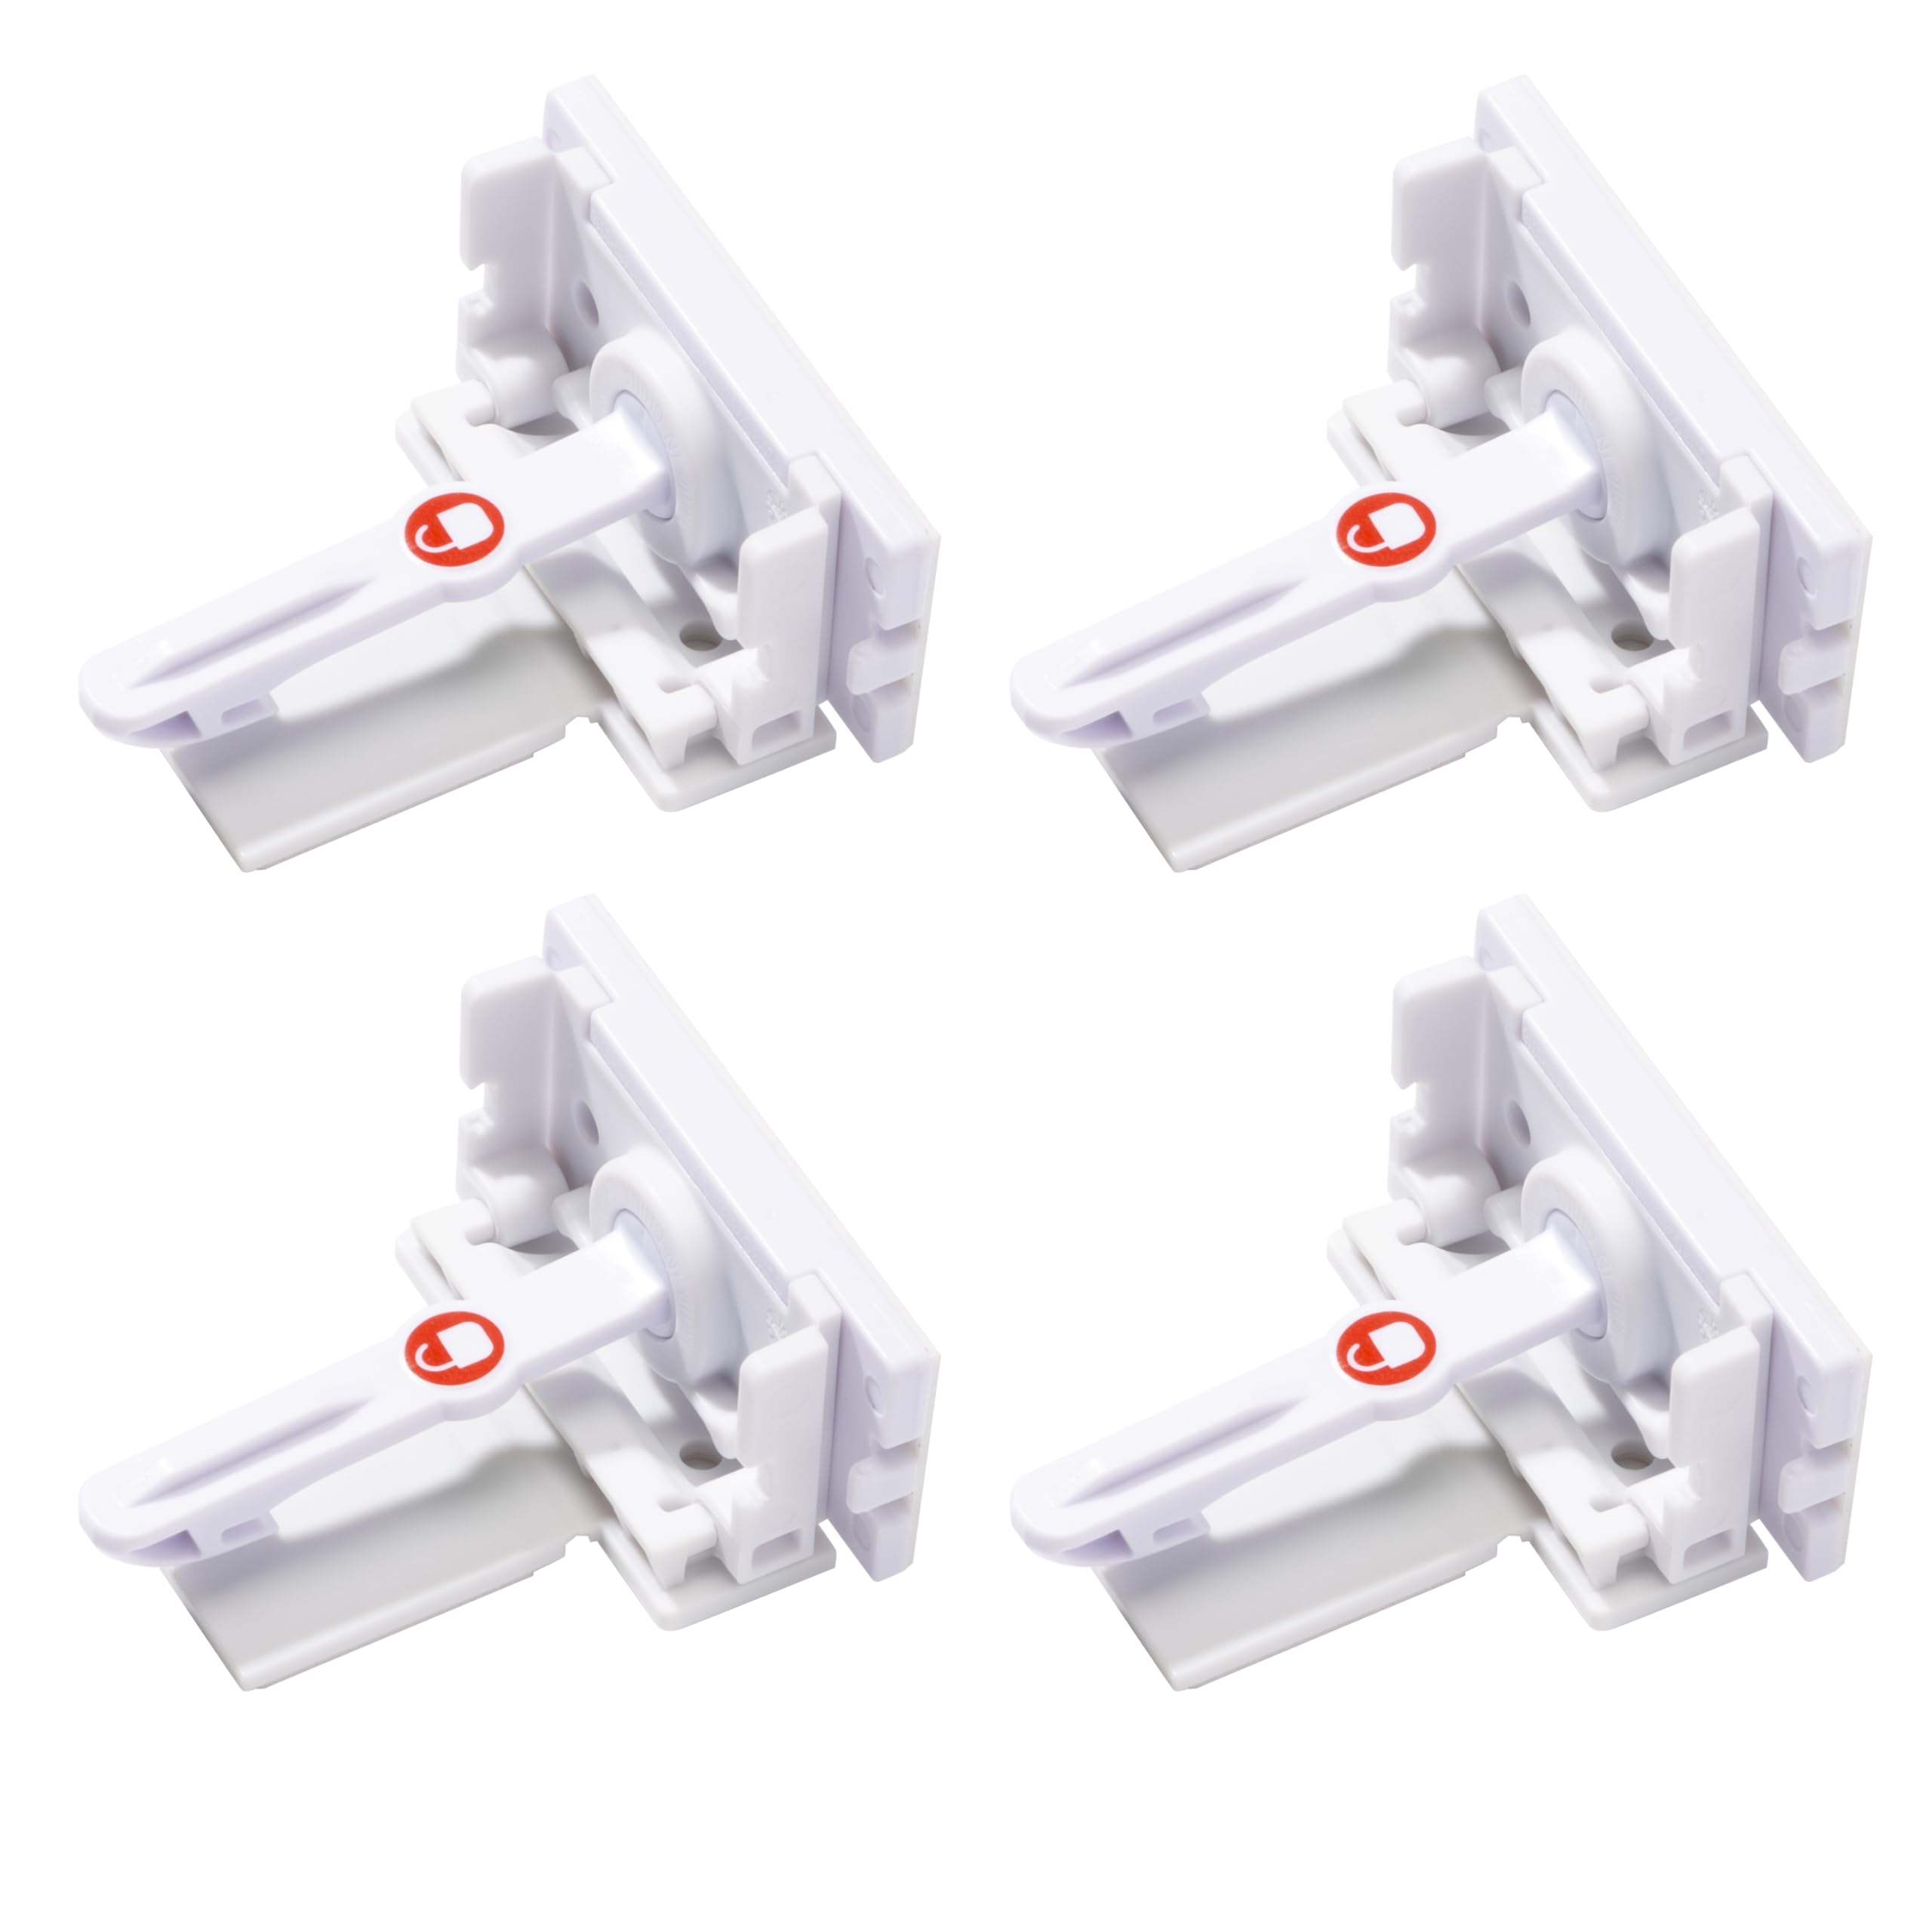 Safety 1st¨ Secure-to-Explore Adhesive Locks (4 Locks), White